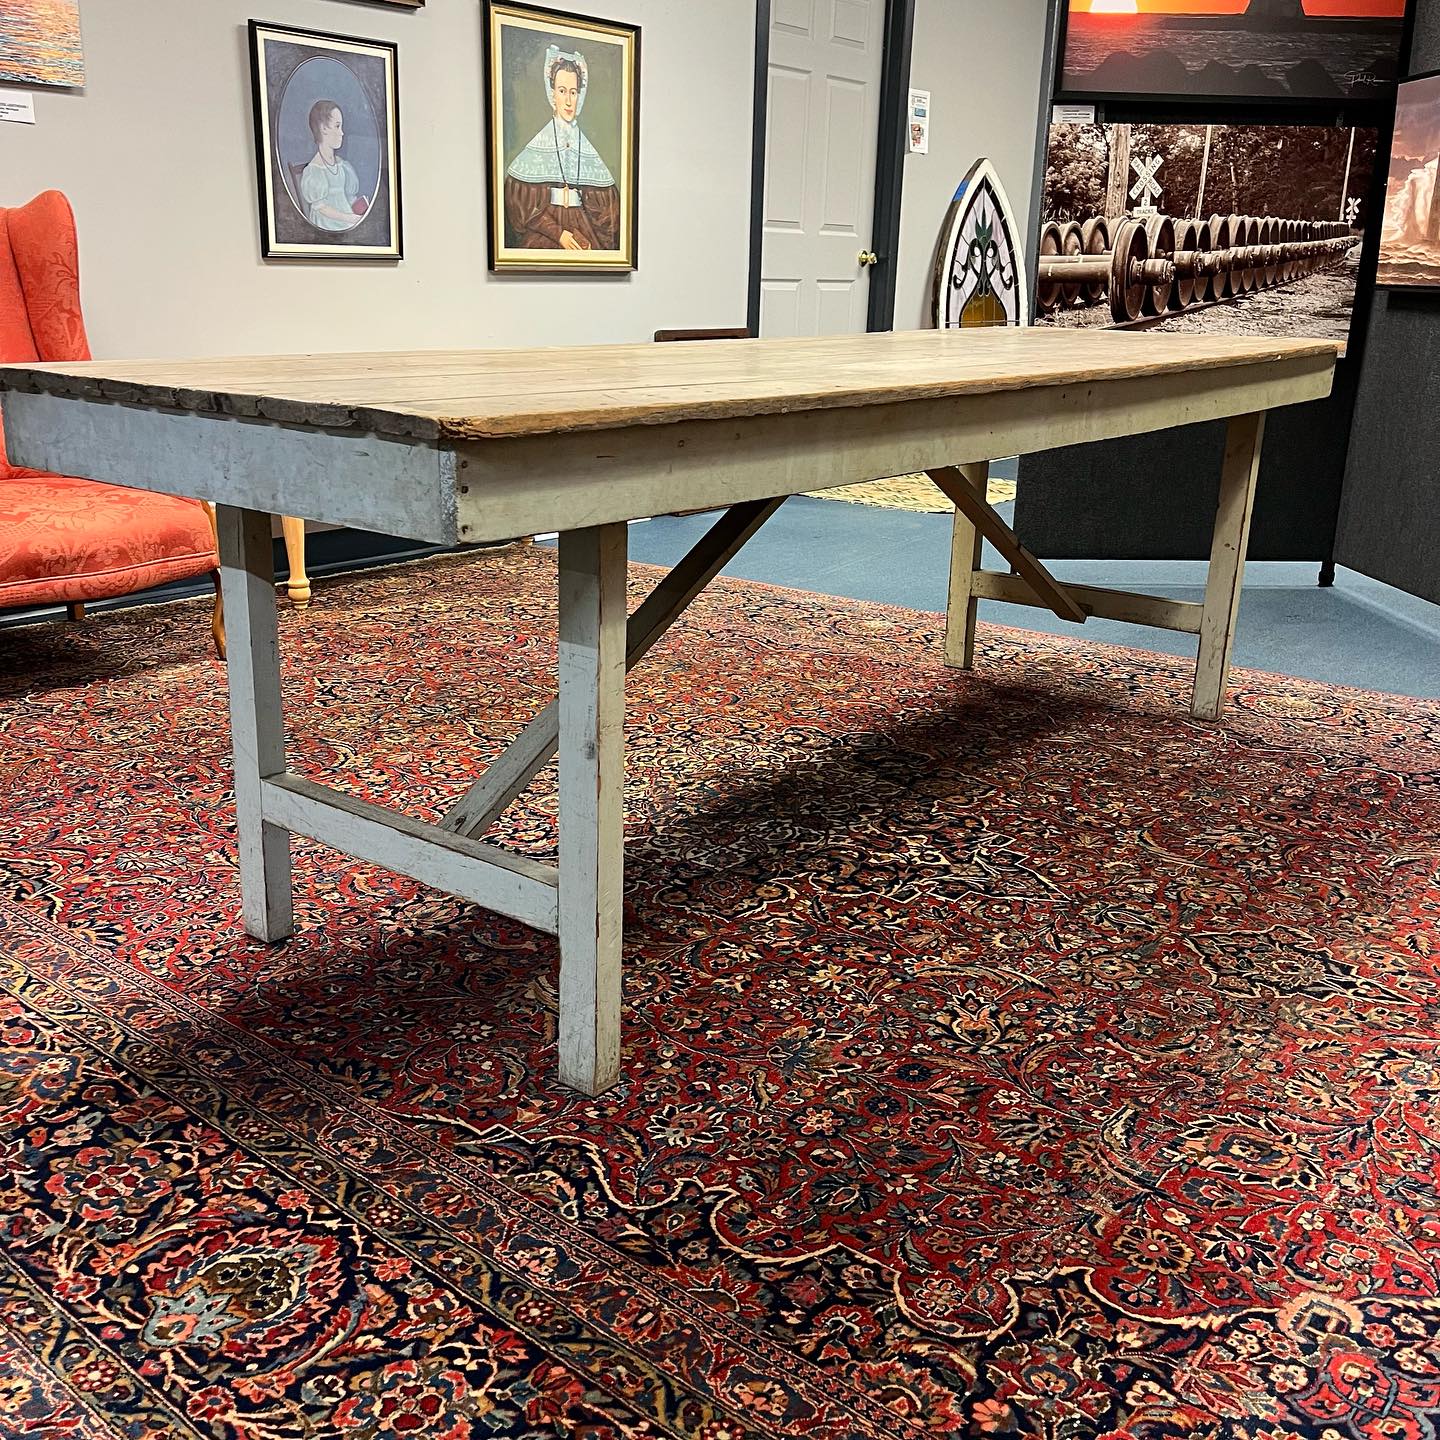 Rustic Antique Table - 8ft Long!